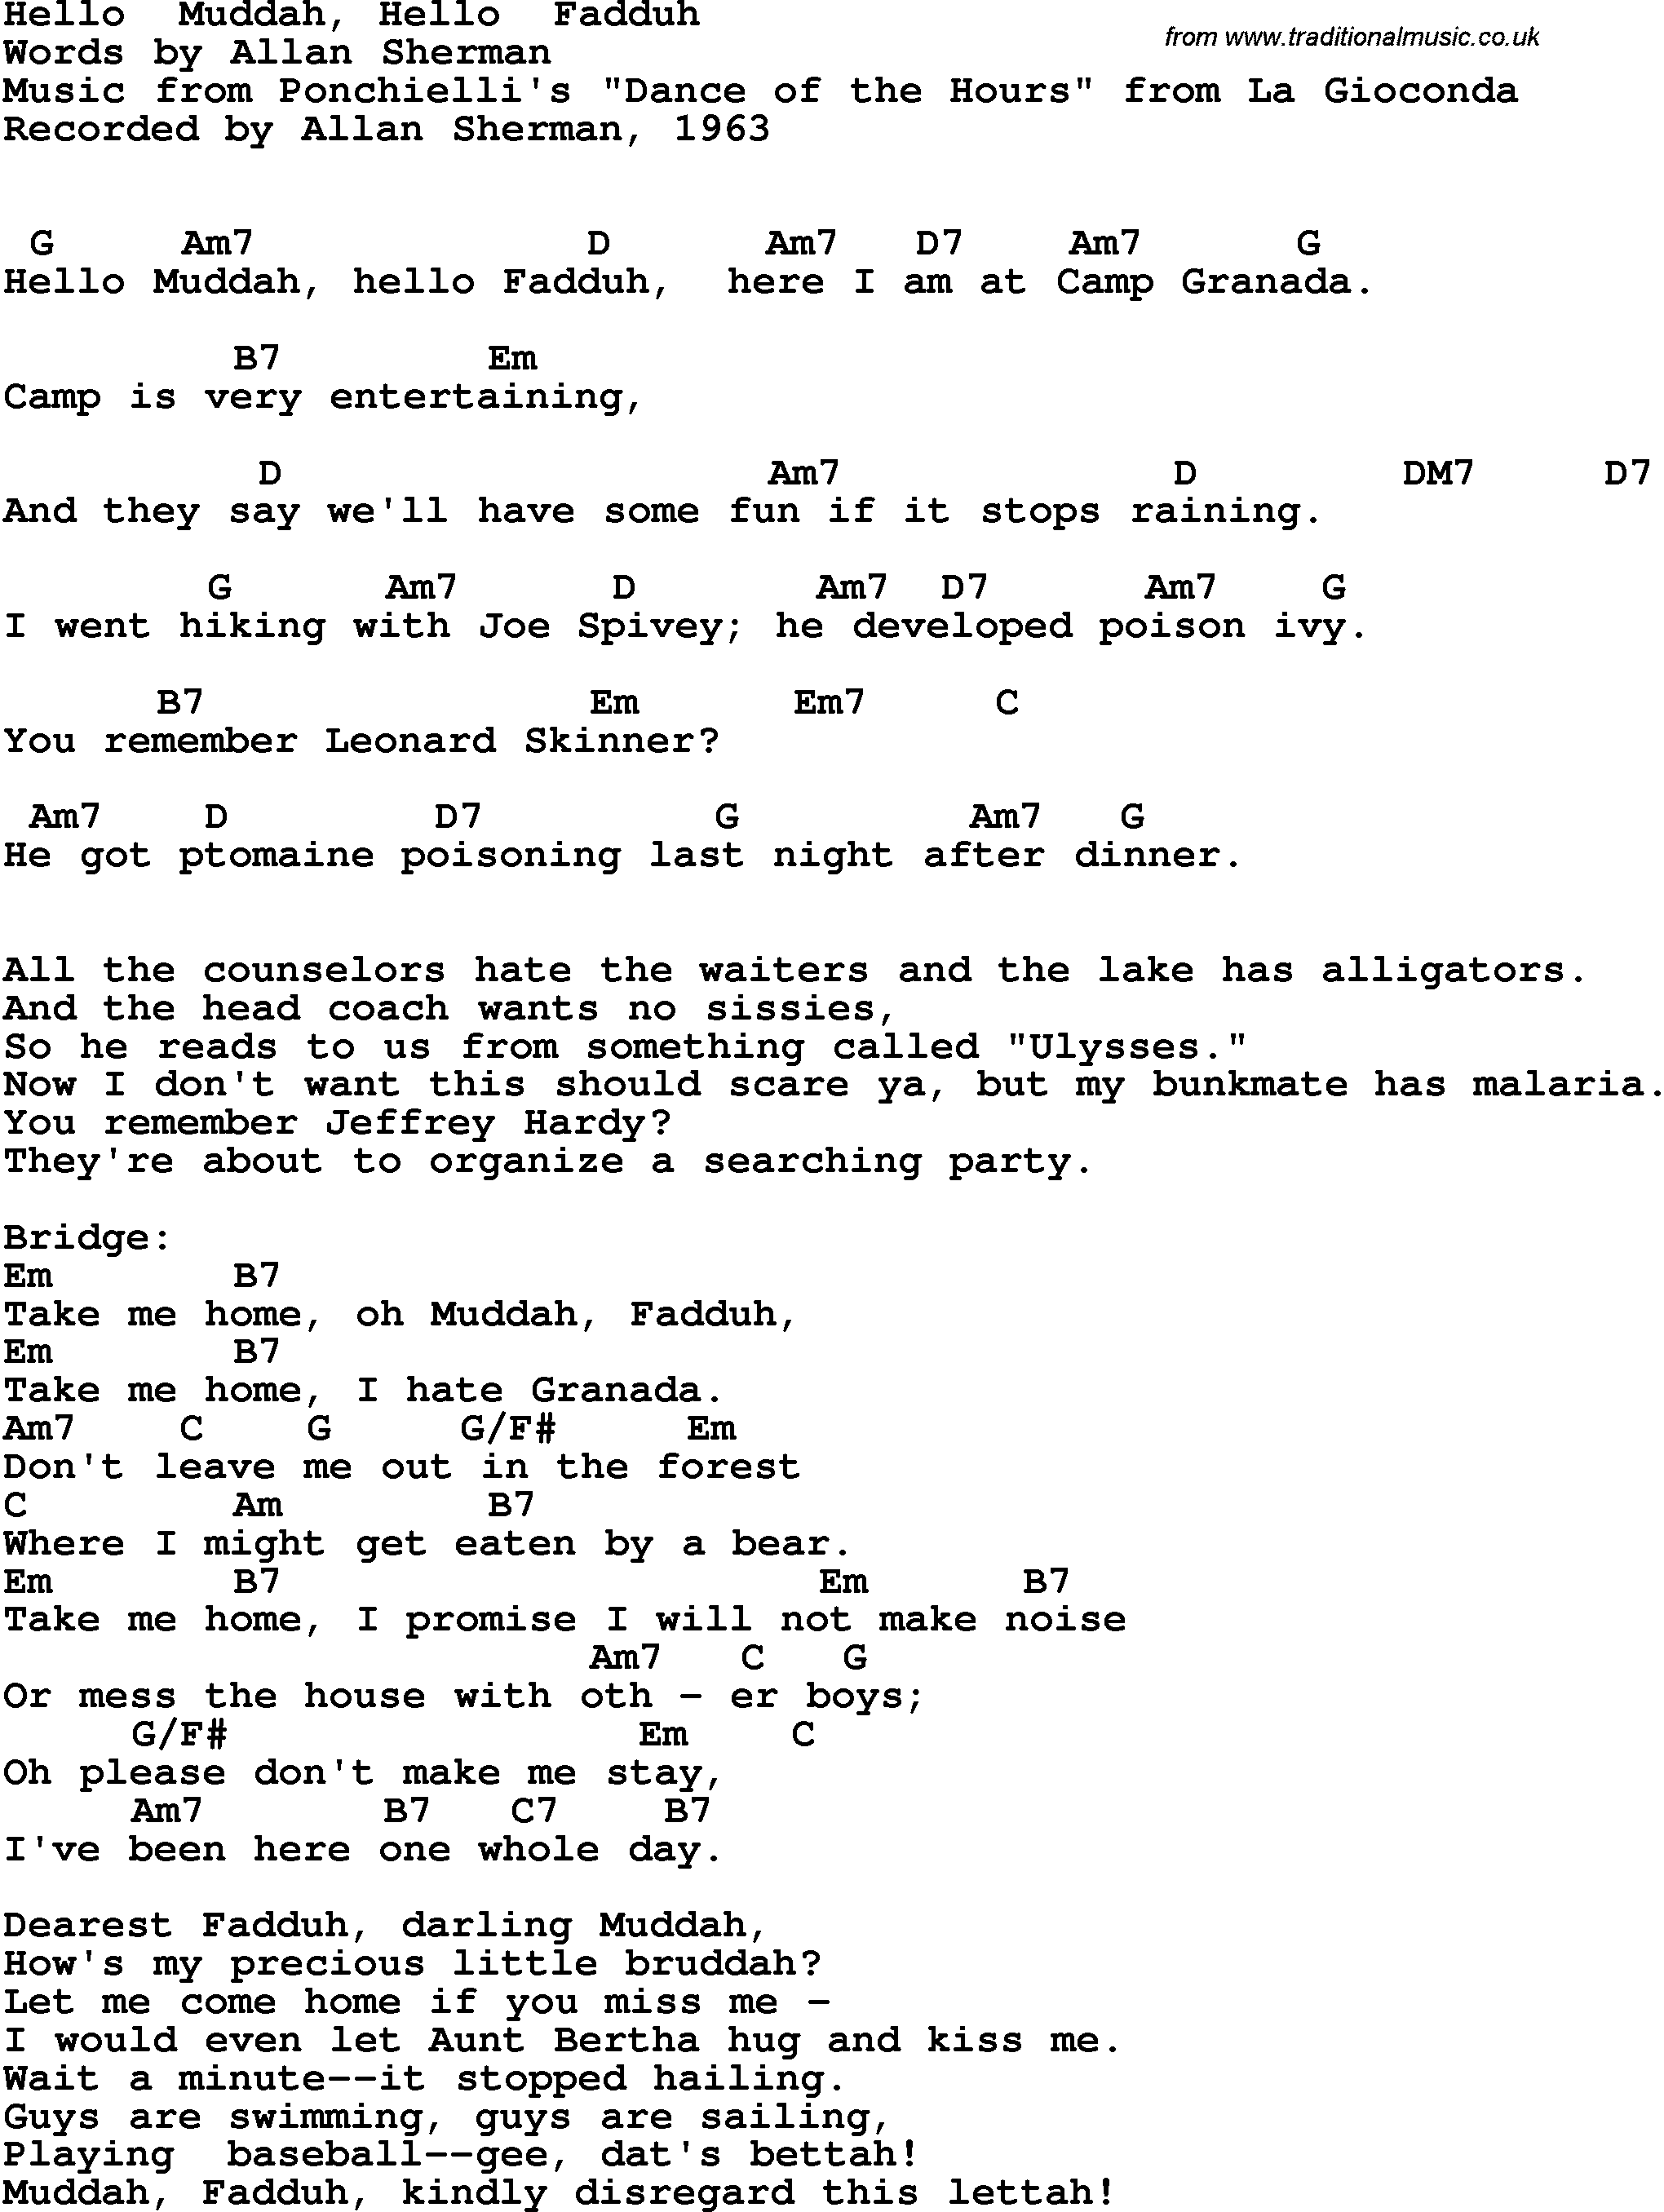 Song Lyrics with guitar chords for Hello Muddah, Hello Fadduh - Allan Sherman, 1963